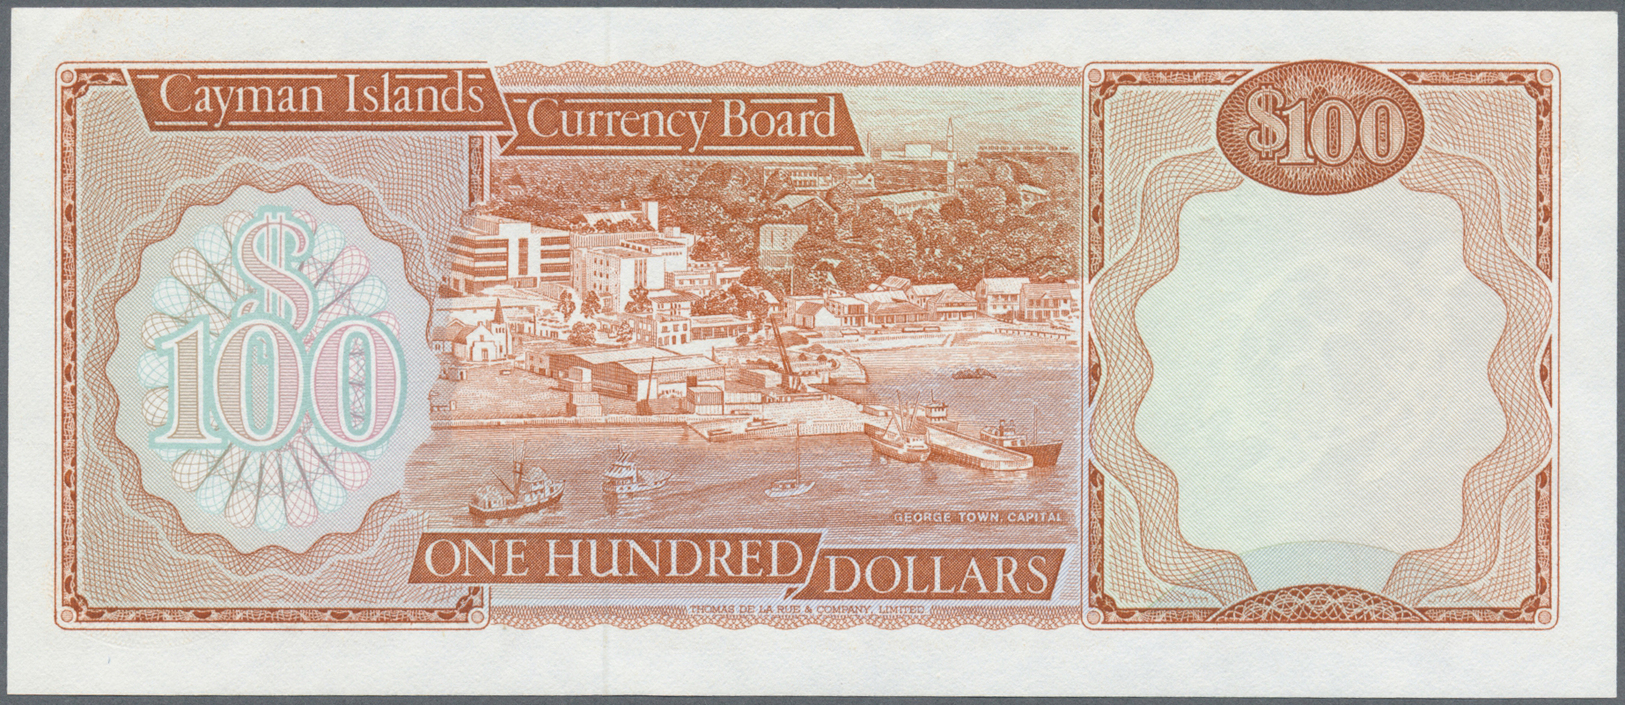 00511 Cayman Islands: 100 Dollars L.194 P. 11 In Condition: UNC. - Cayman Islands